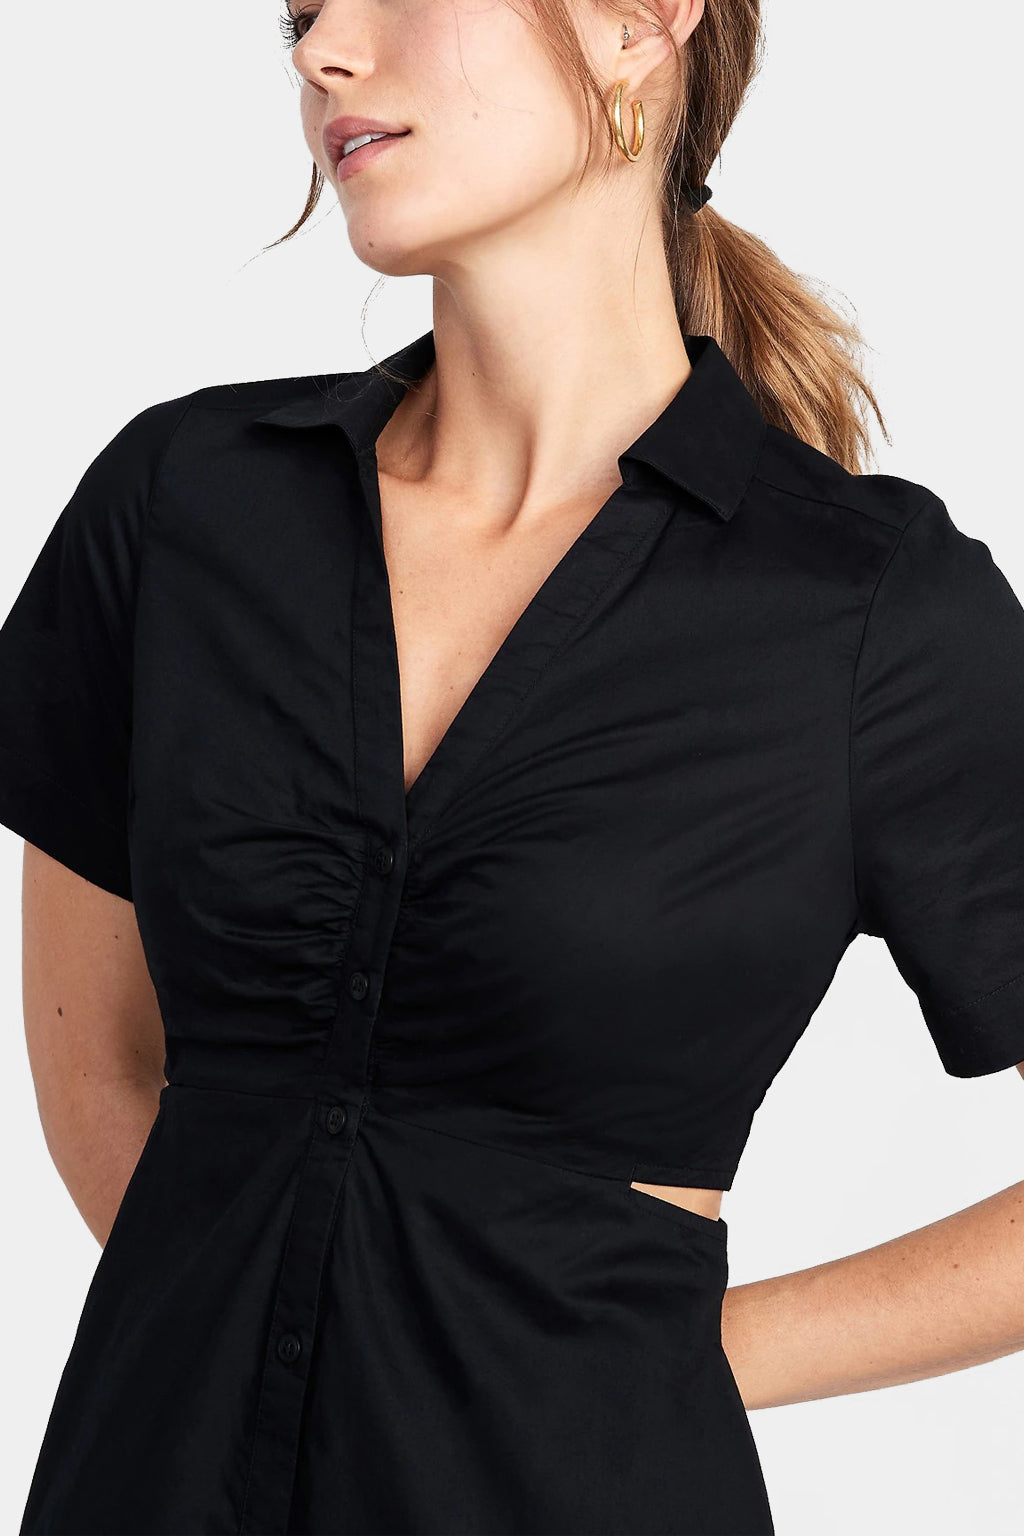 Old Navy - Cutout Midi Shirt Dress for Women